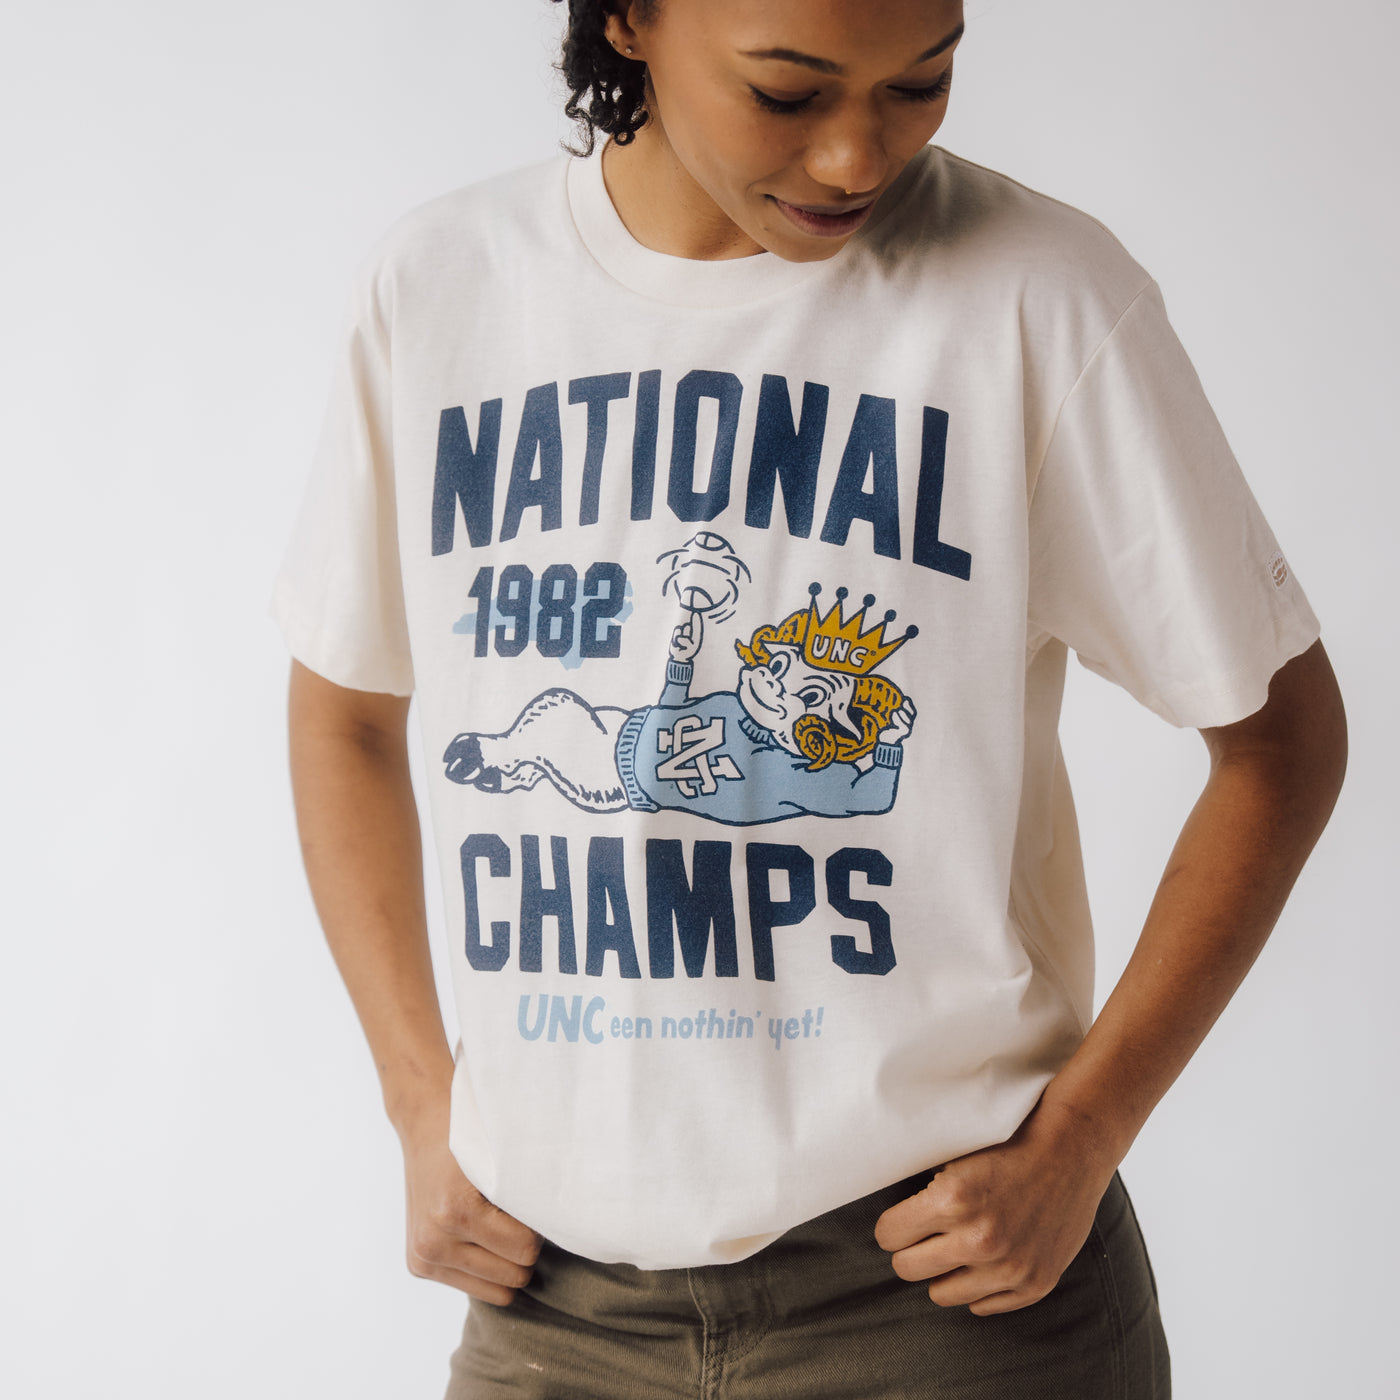 UNC Men's Basketball Vintage 1982 National Champs Tee